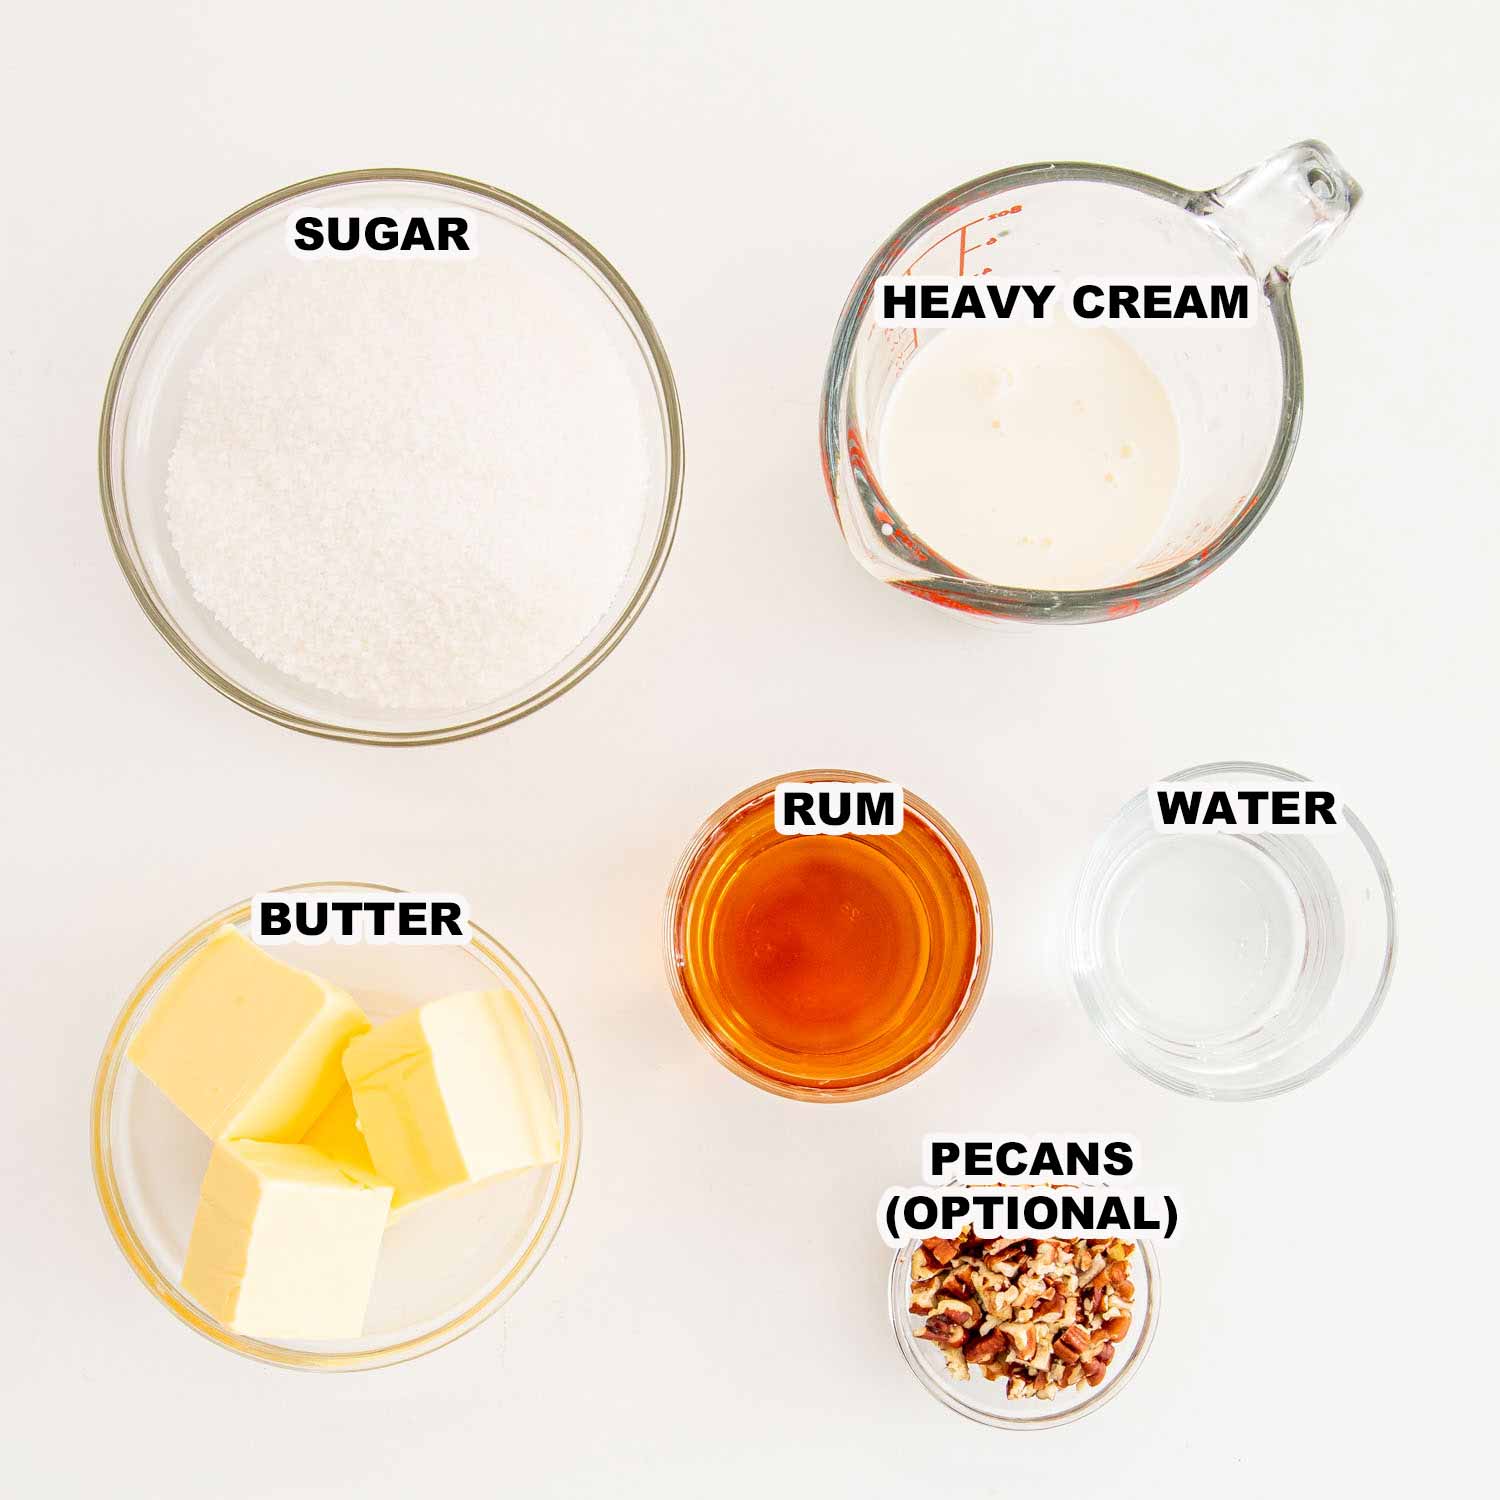 ingredients needed to make caramel rum sauce.